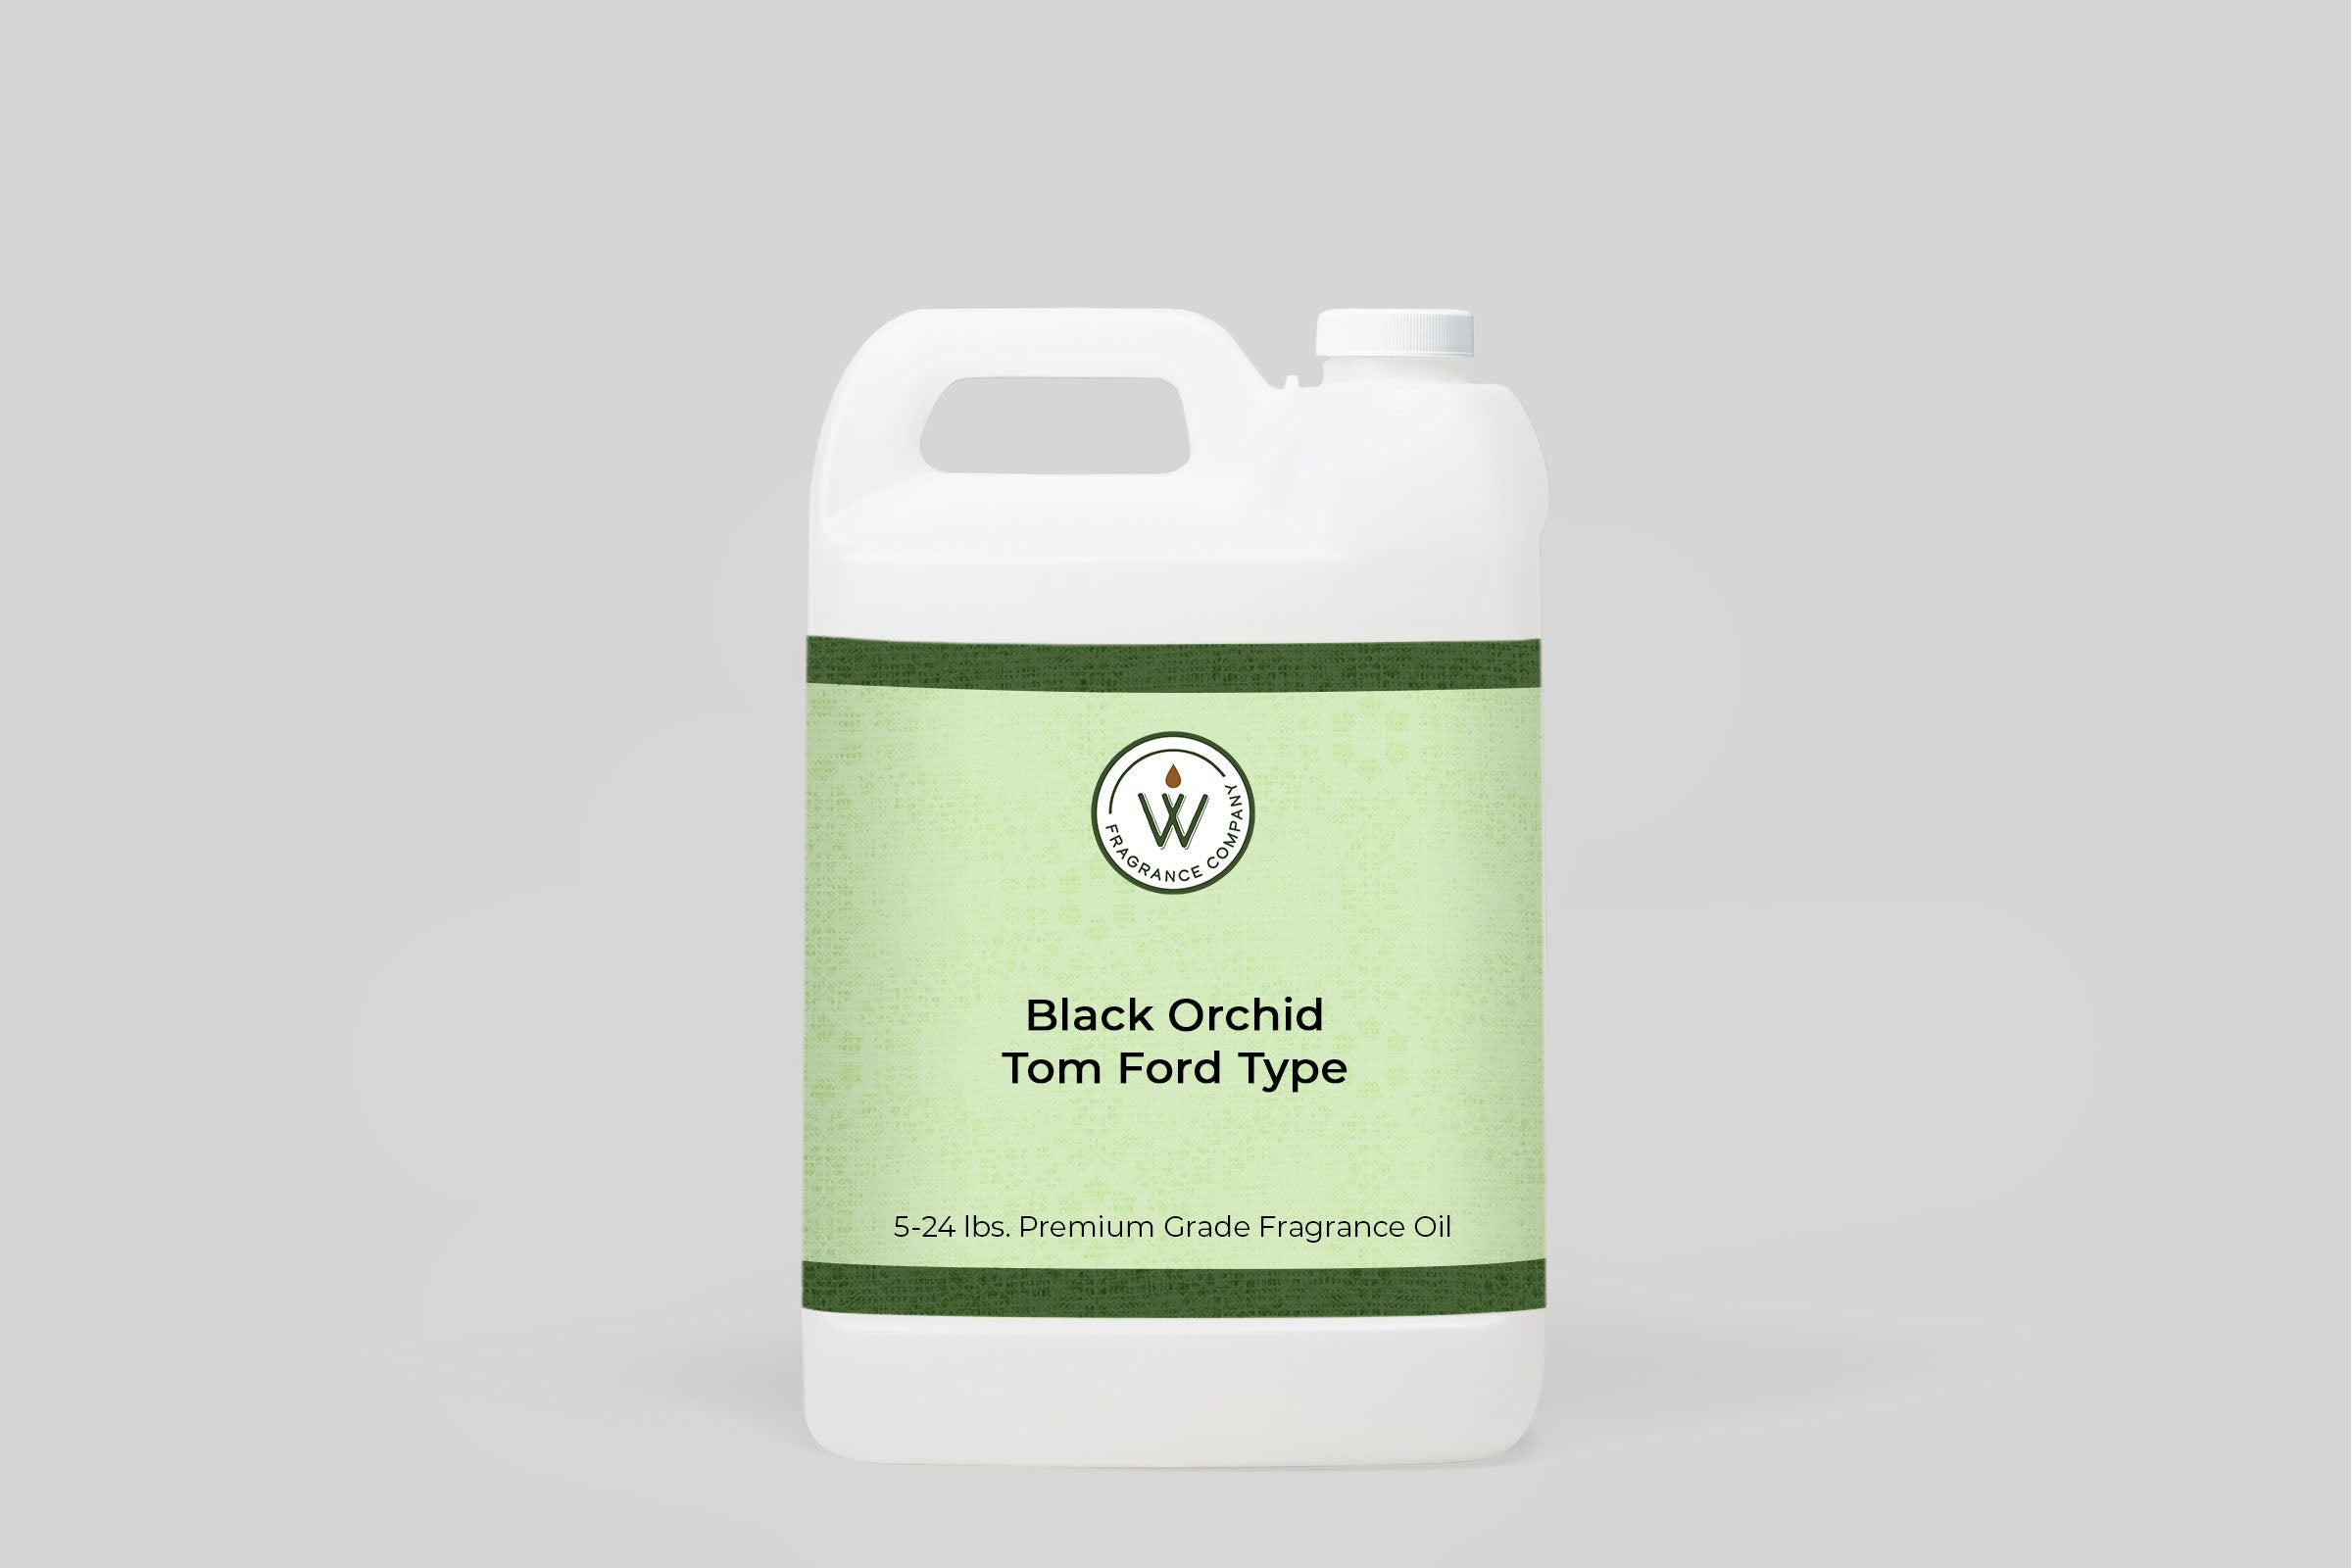 Black Orchid Tom Ford Type Fragrance Oil